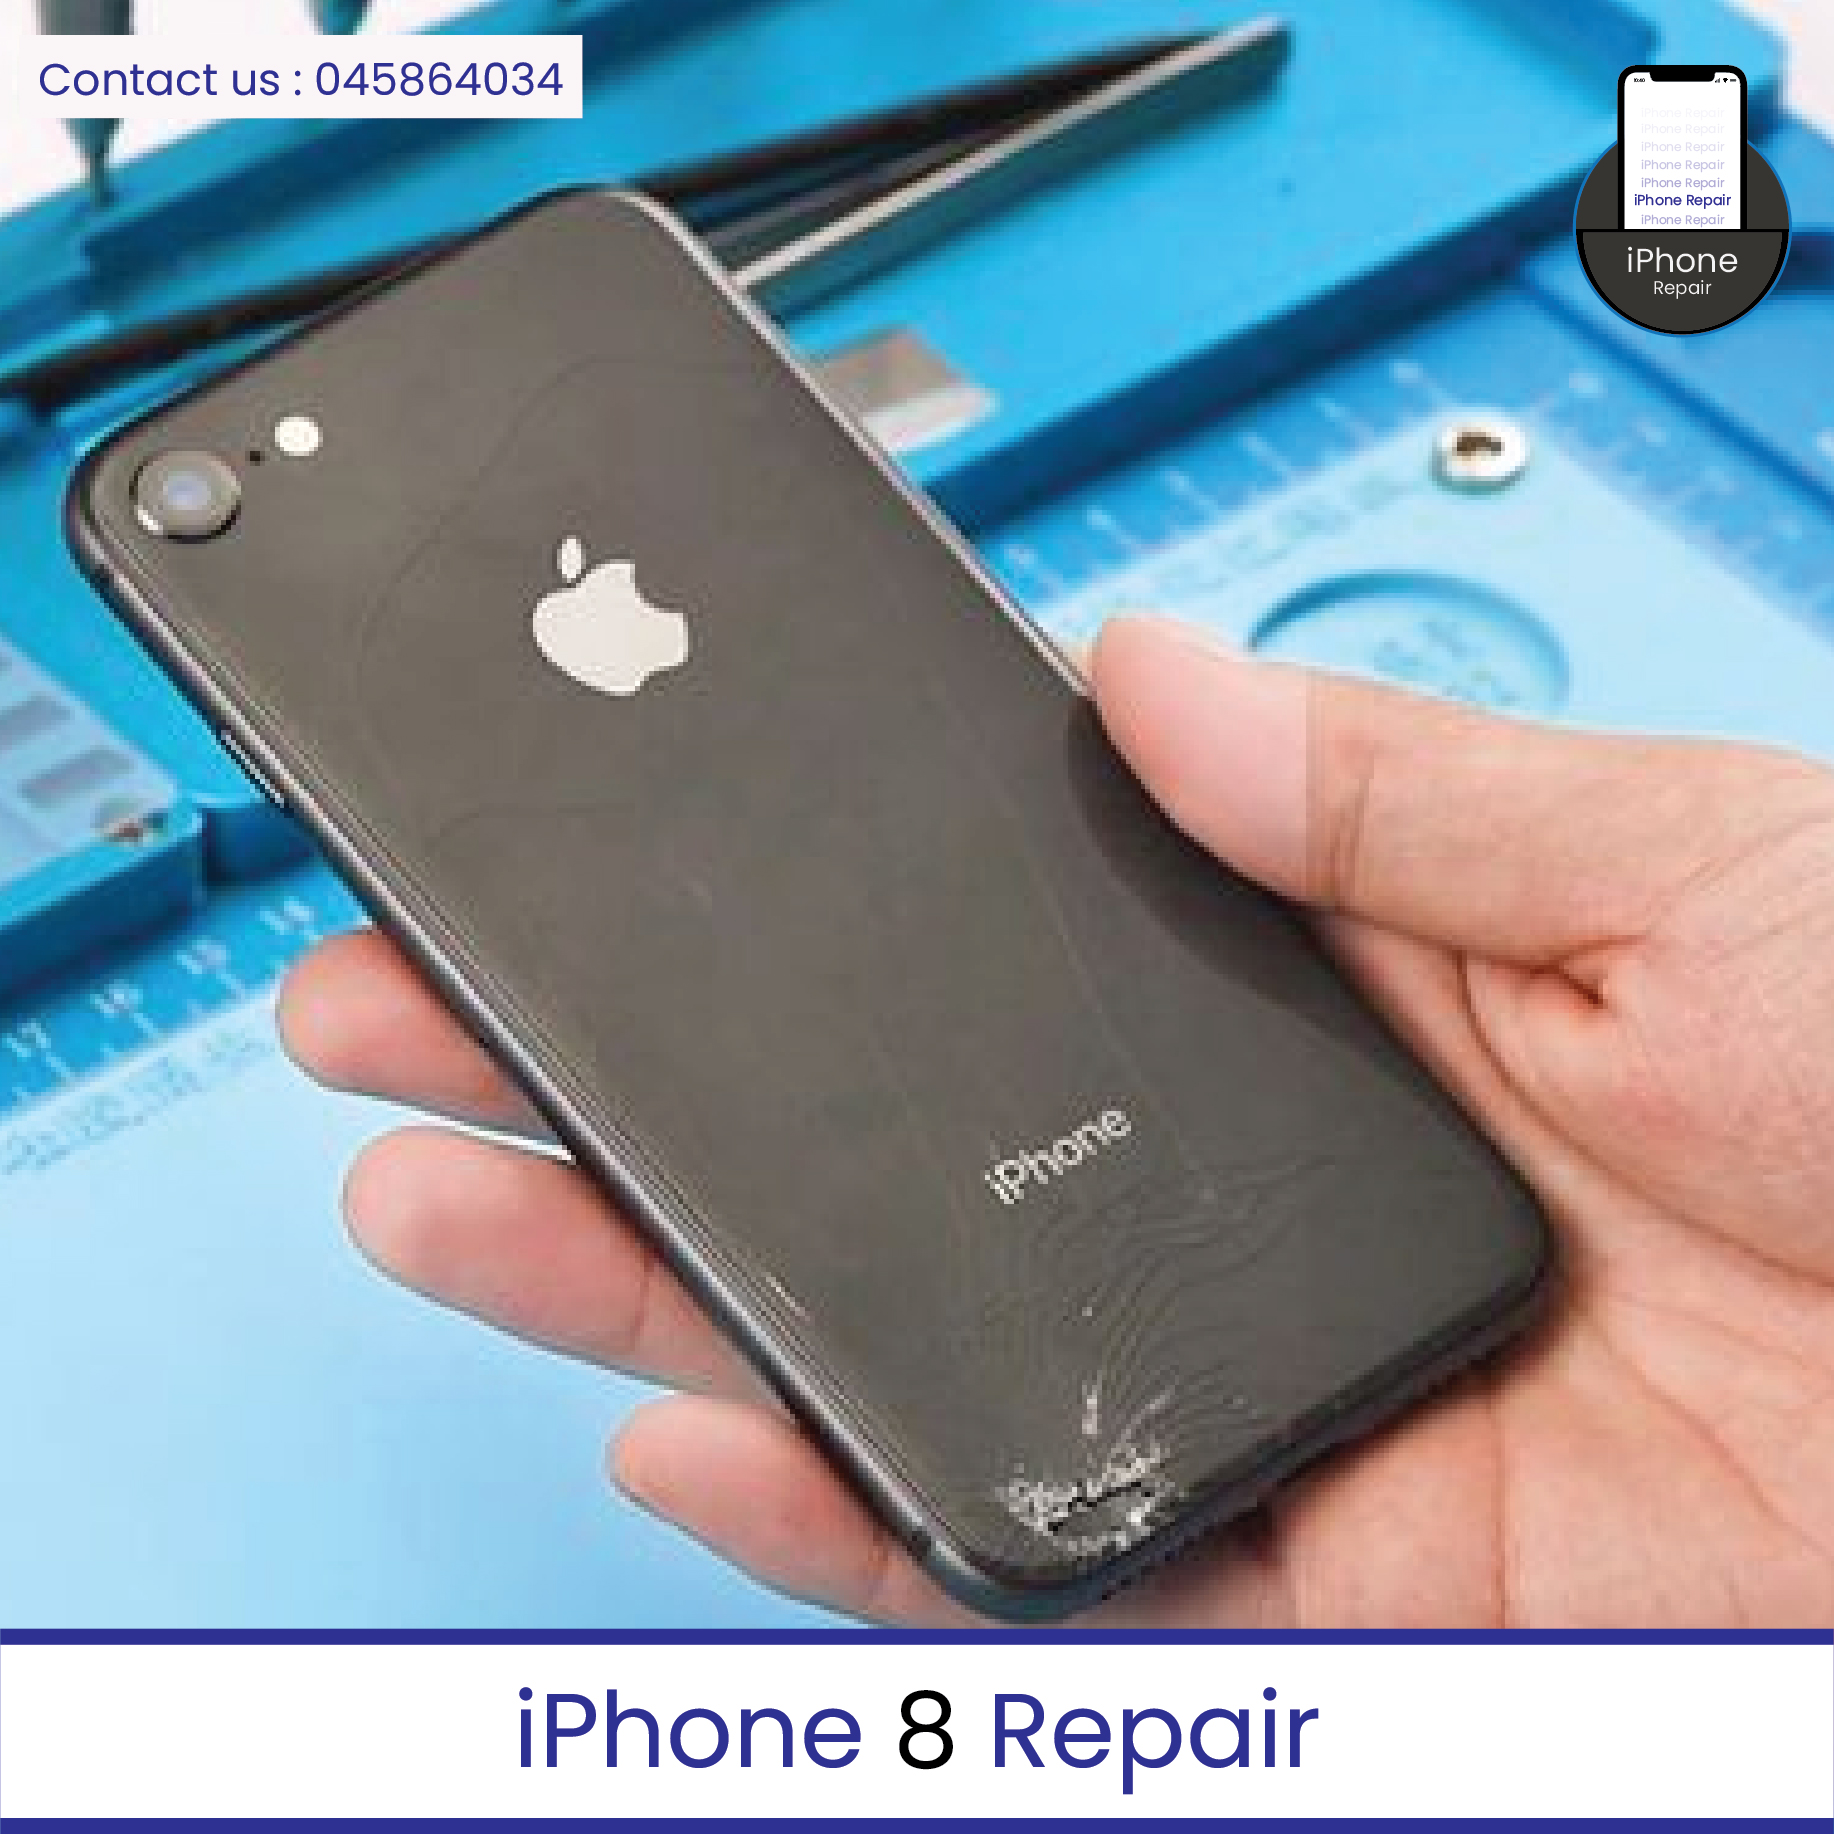 iPhone 8 Repair dubai